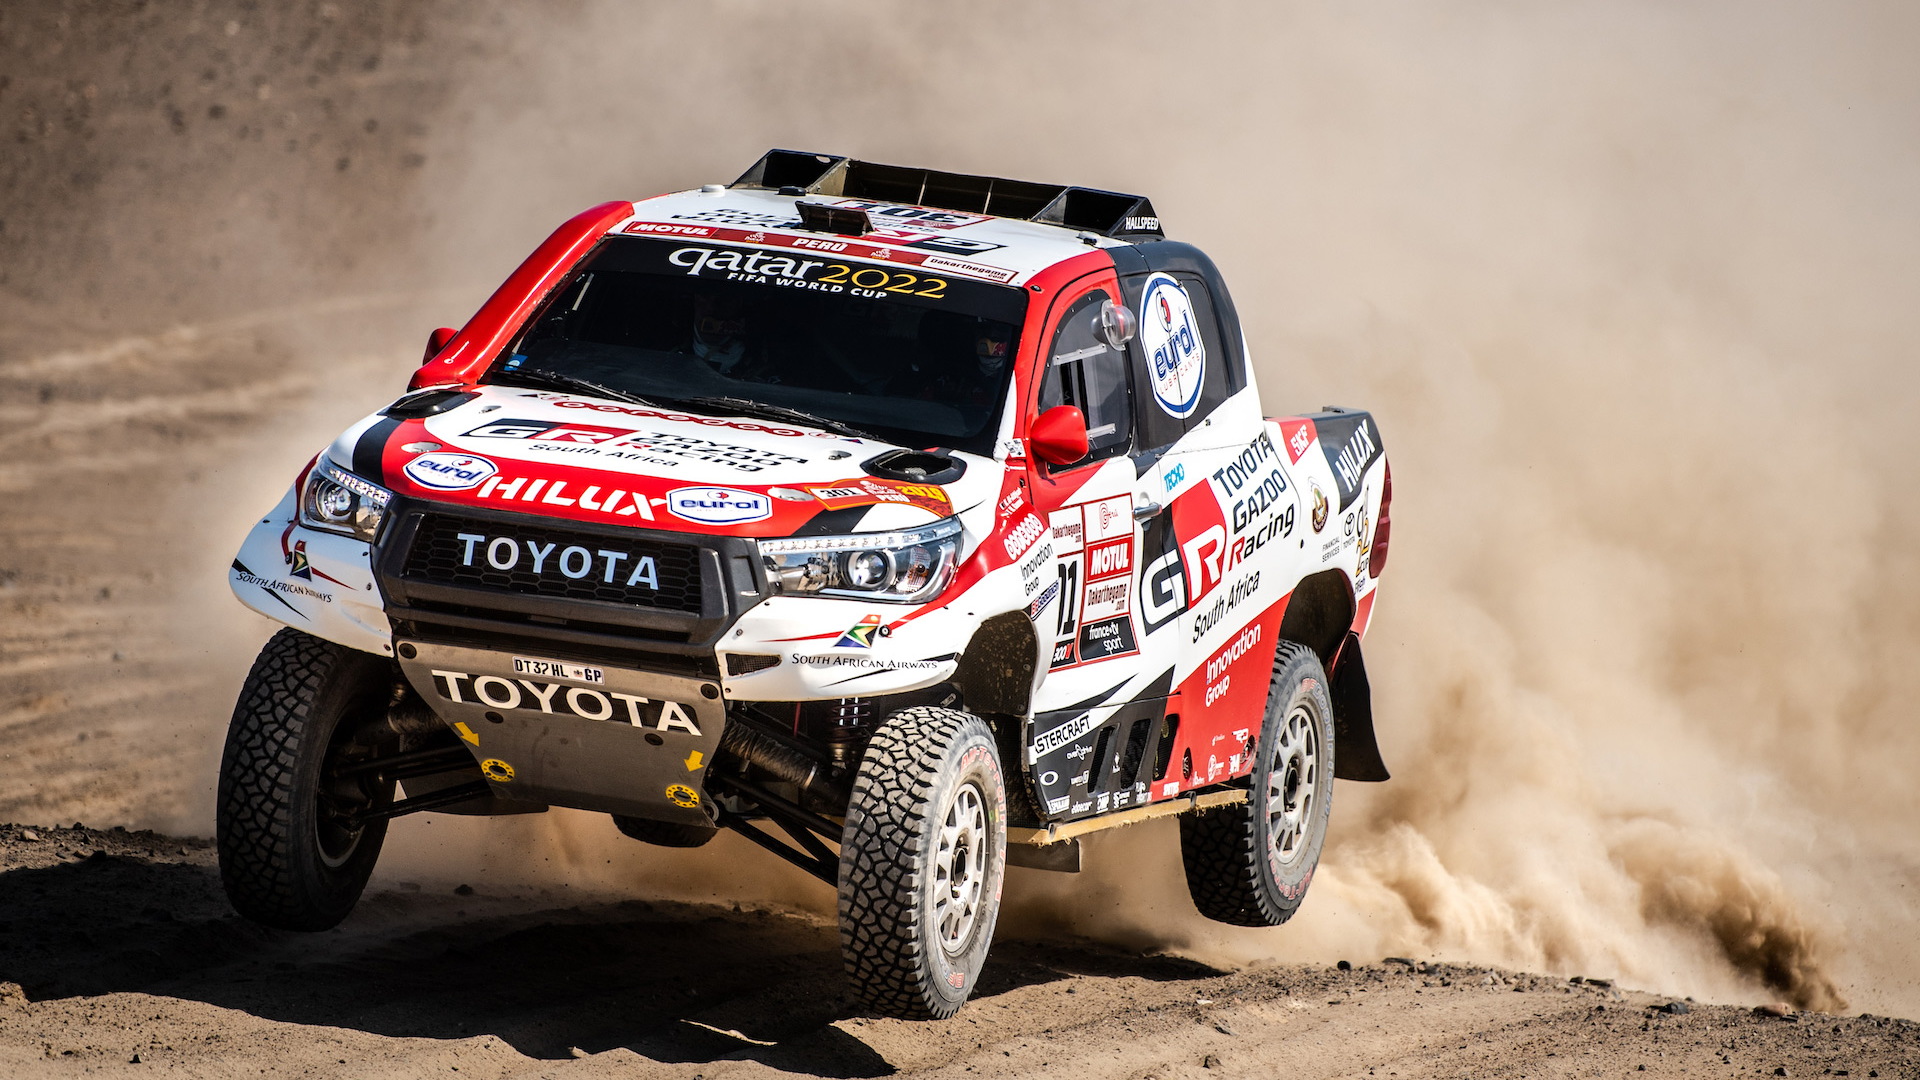 Toyota Hilux at the 2019 Dakar rally